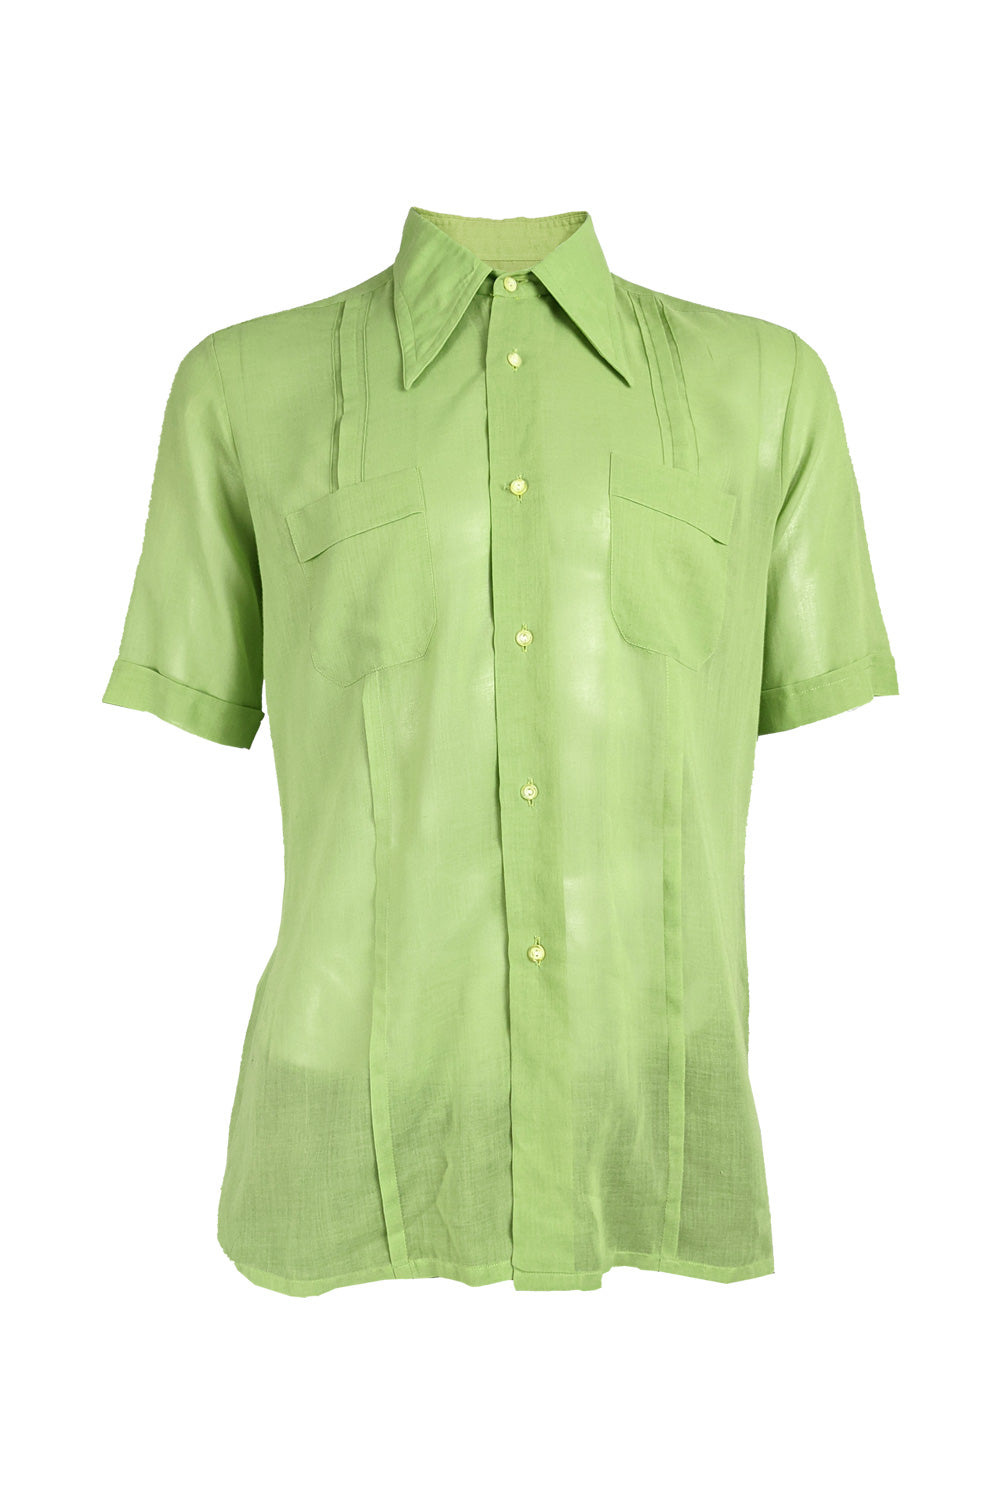 Mens Vintage Green Sheer Pleated Shirt, 1960s